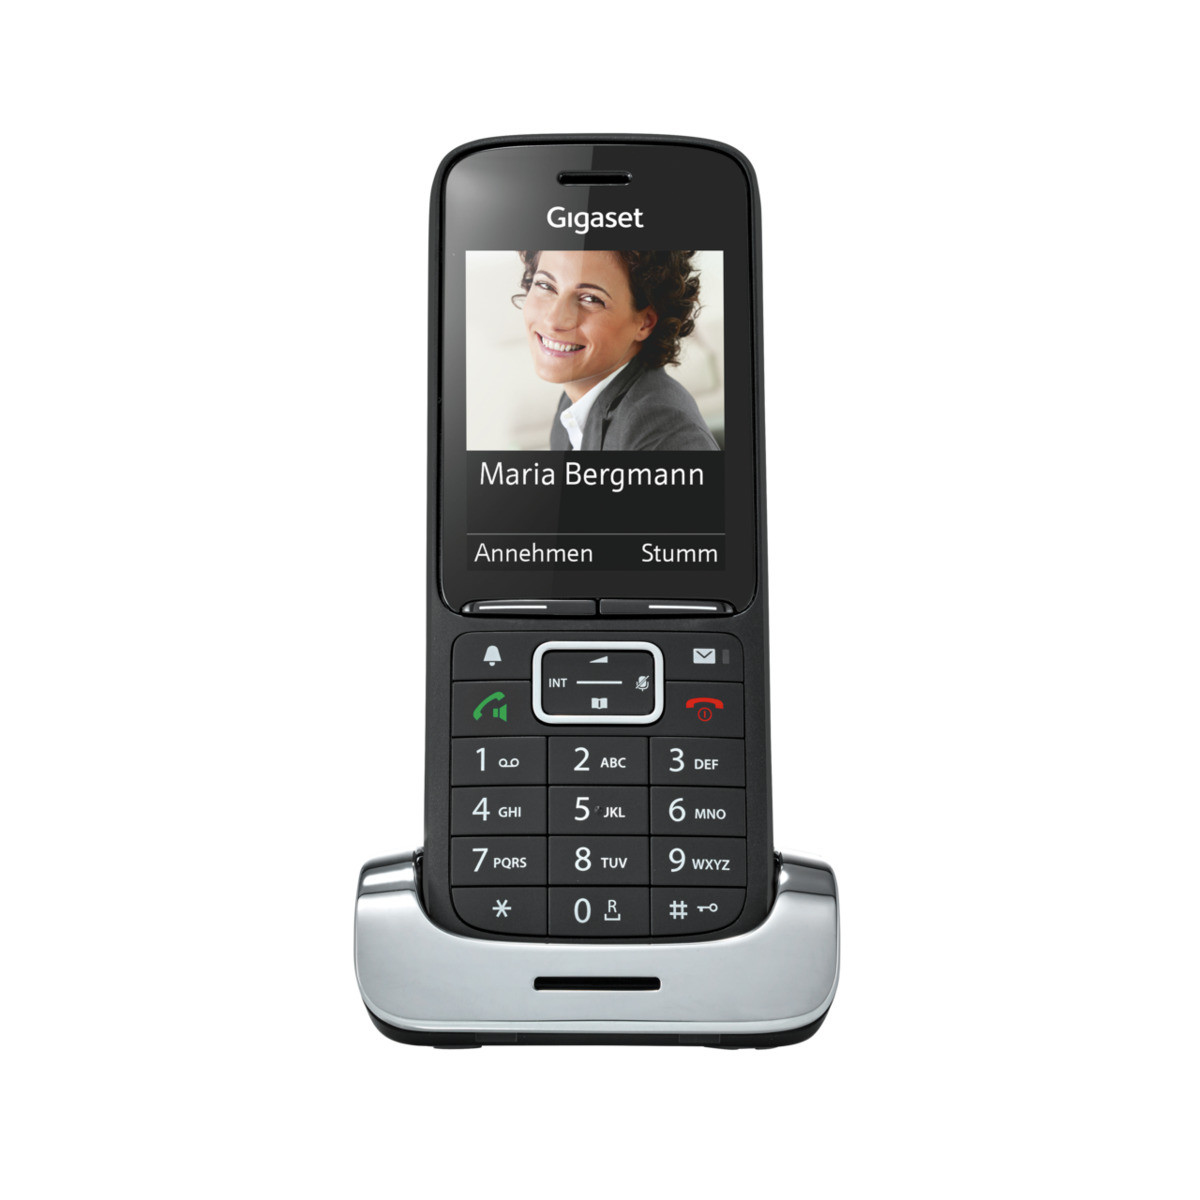 S30852-H2751-B113 UNIFY GIGASET OPENSTAGE Premium 300 HX Black Edition - DECT telephone - Wireless handset - Speakerphone - 500 entries - Caller ID - Black - Silver